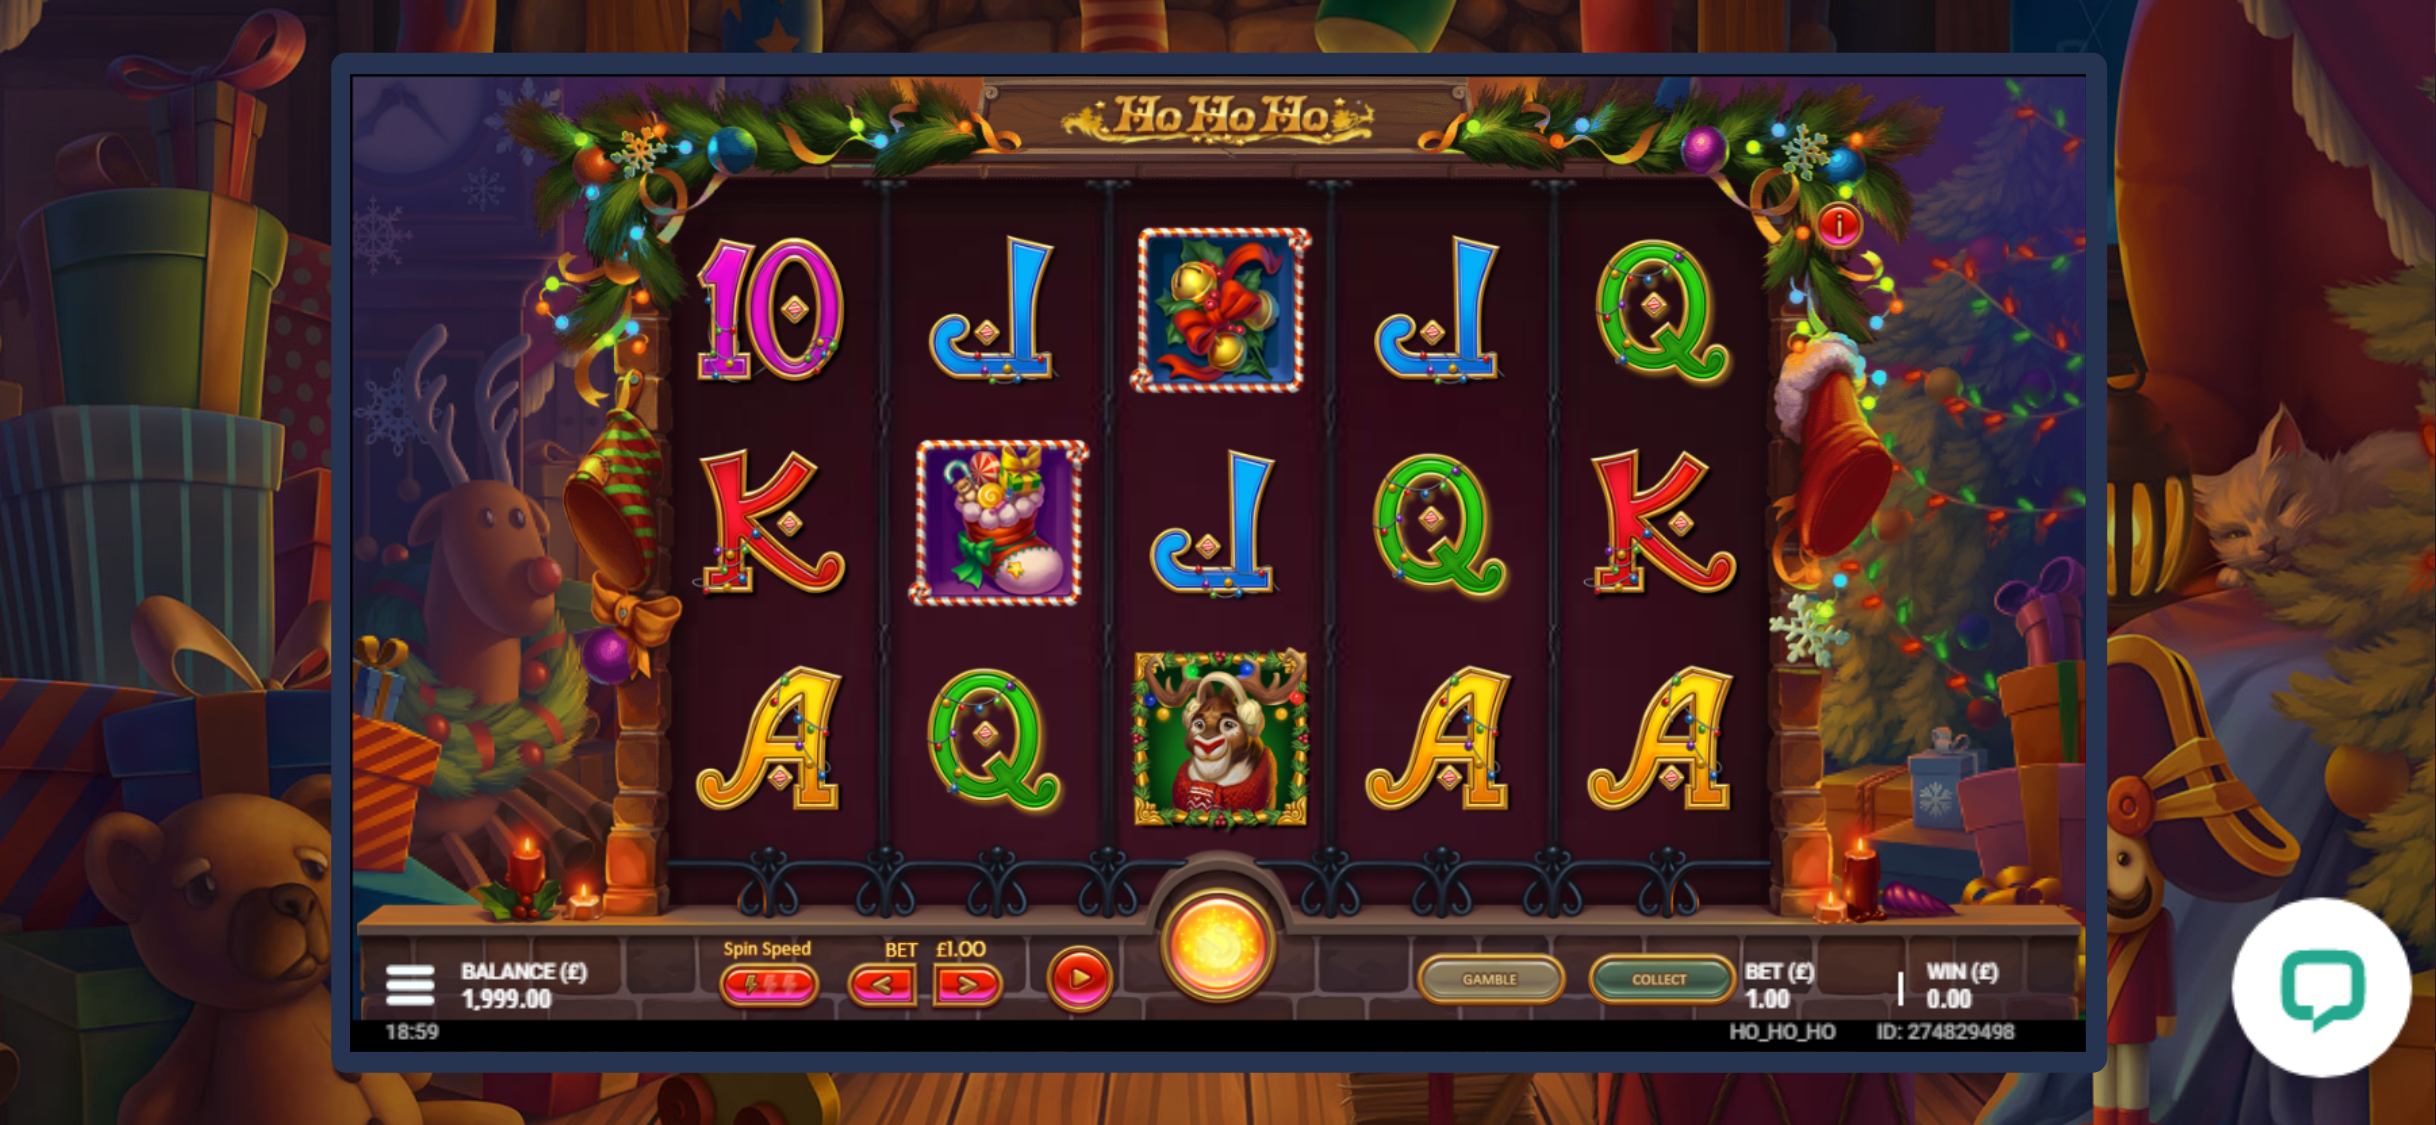 Live Casino Mobile Slot Games Review